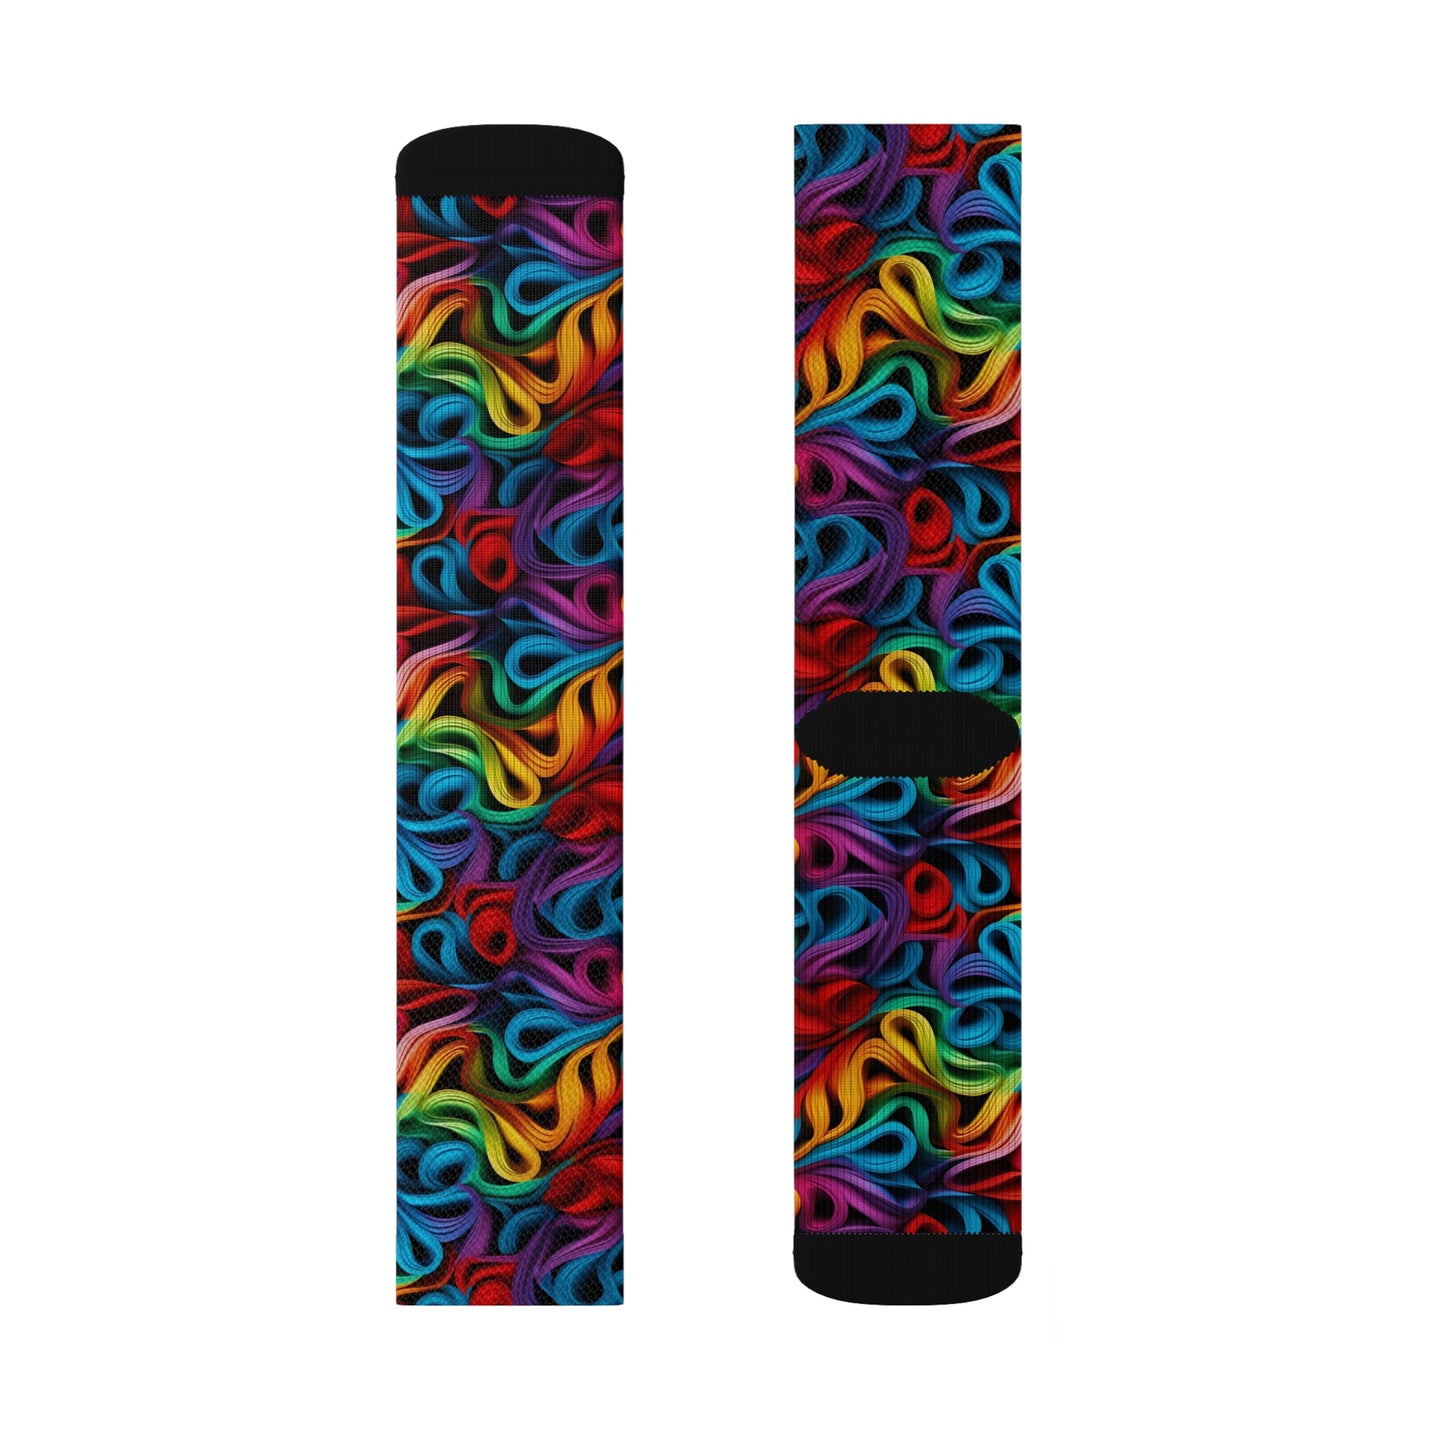 Rubber Band Rainbow Sublimation Socks